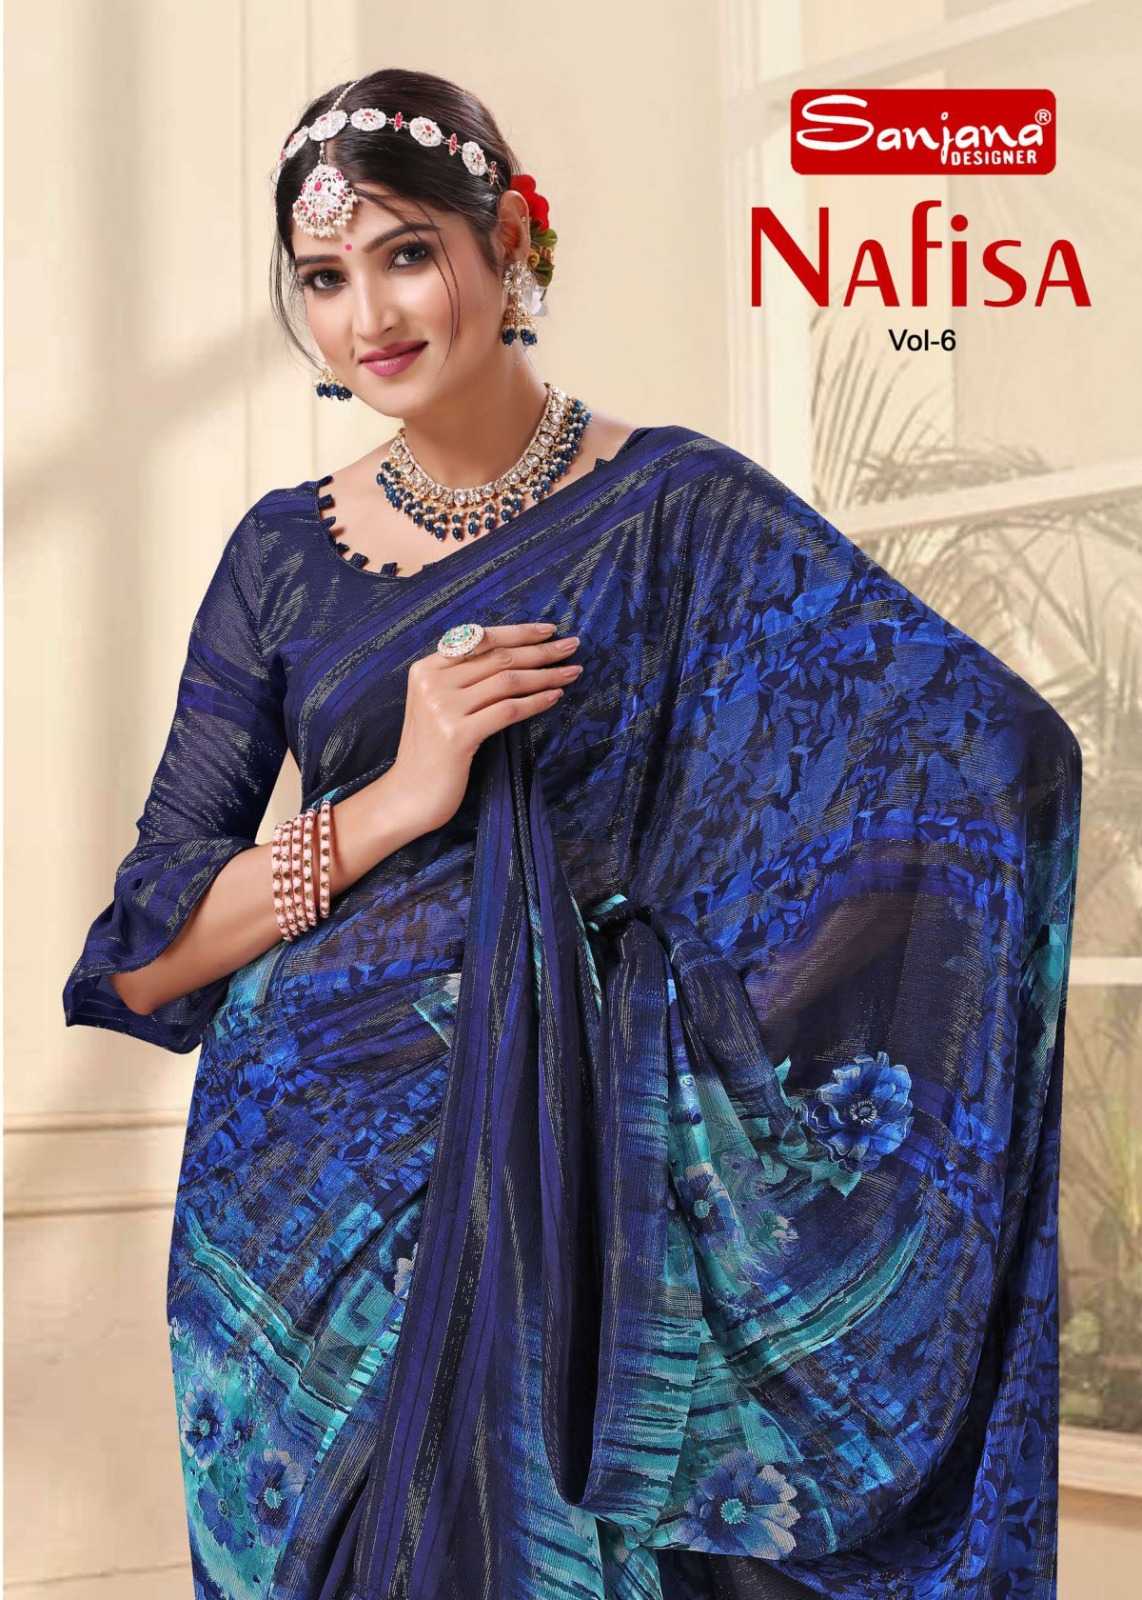 nafisa vol 6 by sanjana designer fancy casual sarees catalog